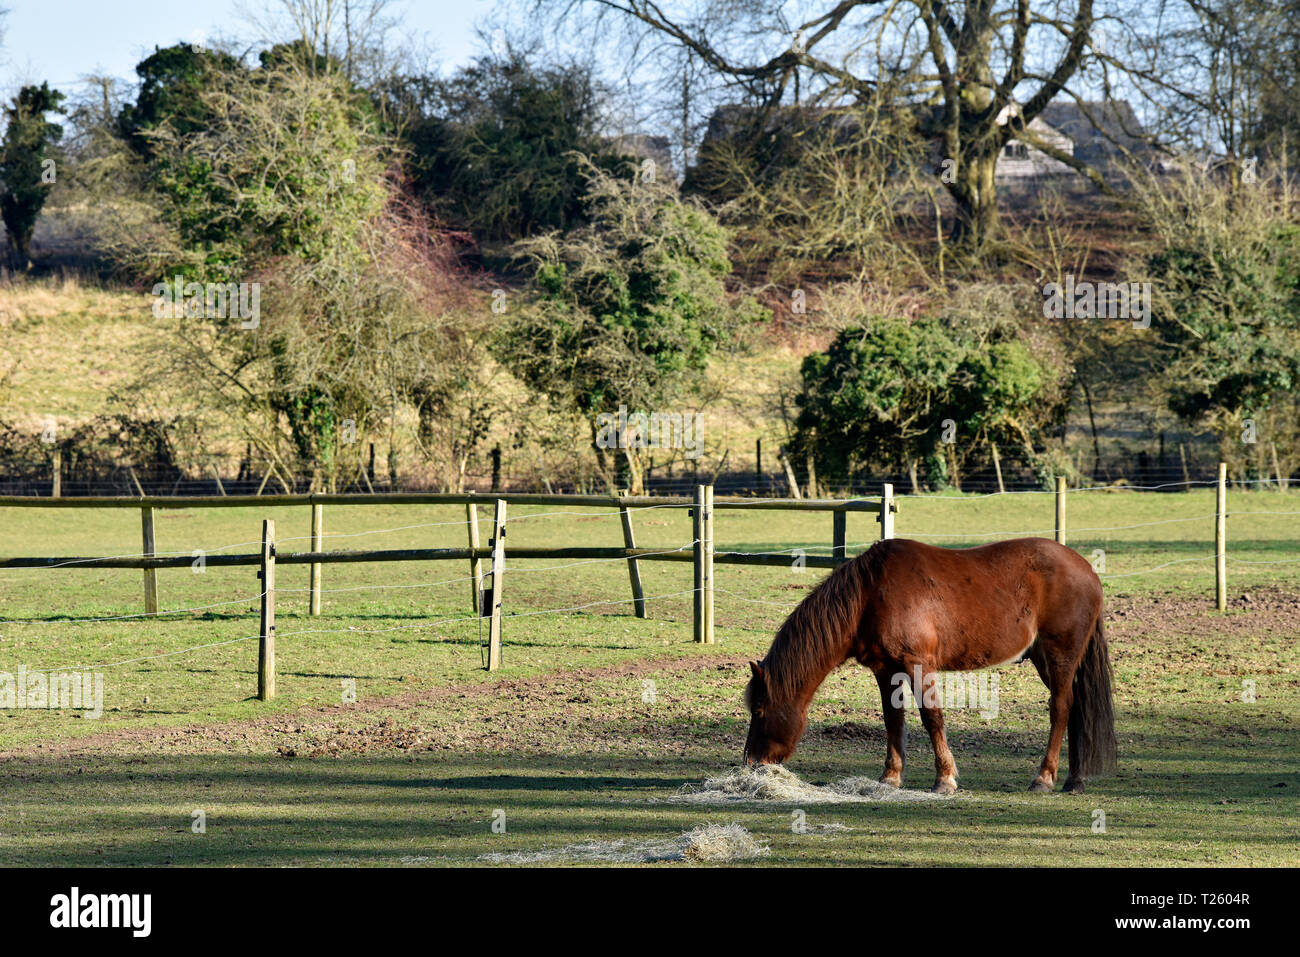 Horse grazing in a field, Chawton, near Alton, Hampshire, UK. Stock Photo